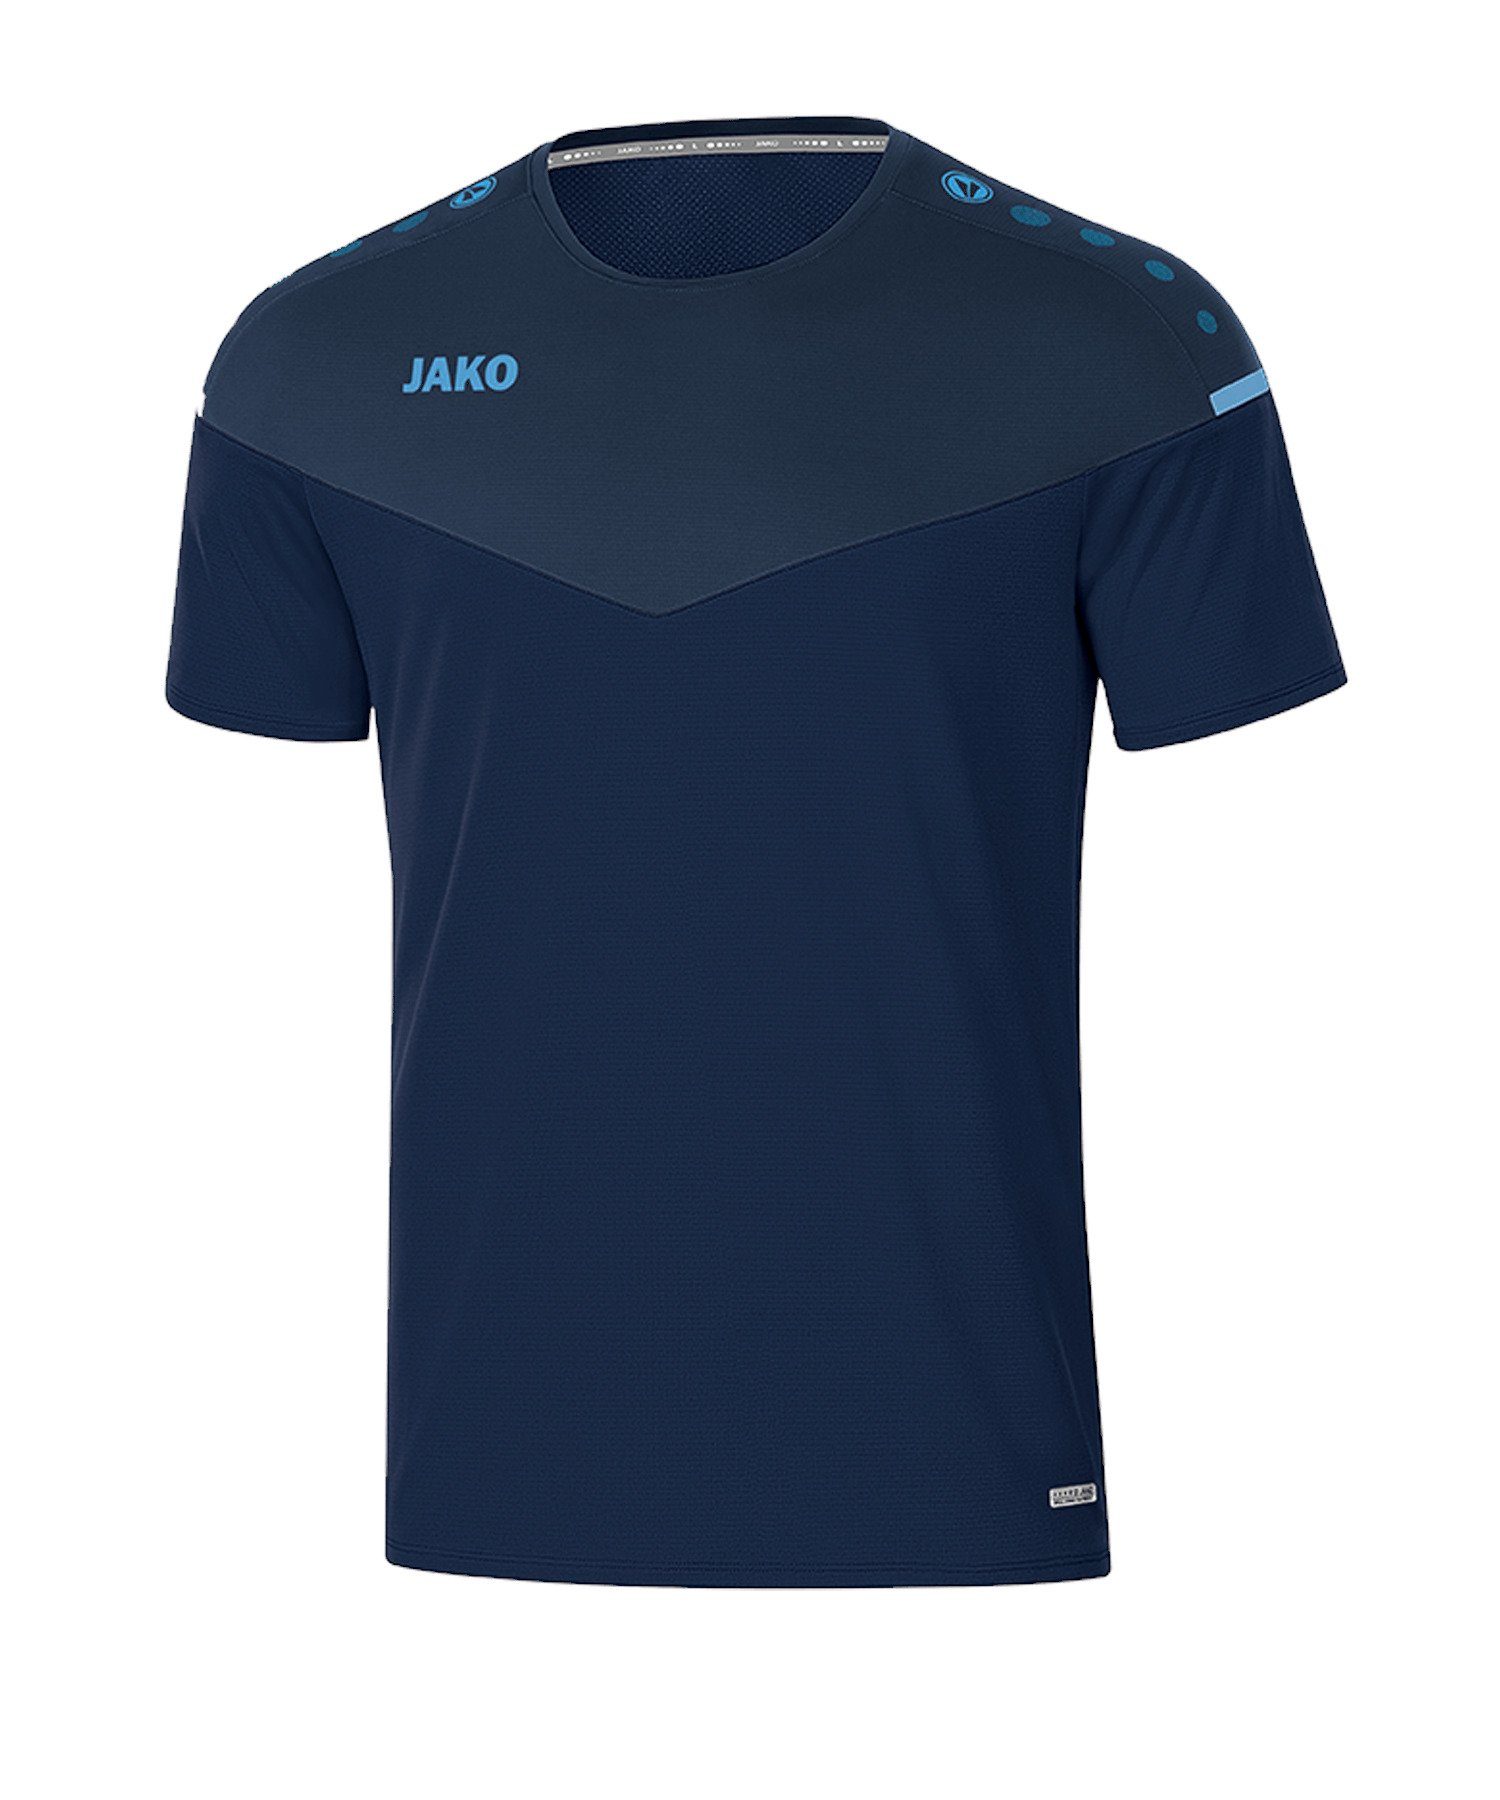 2.0 T-Shirt blau Jako default T-Shirt Champ